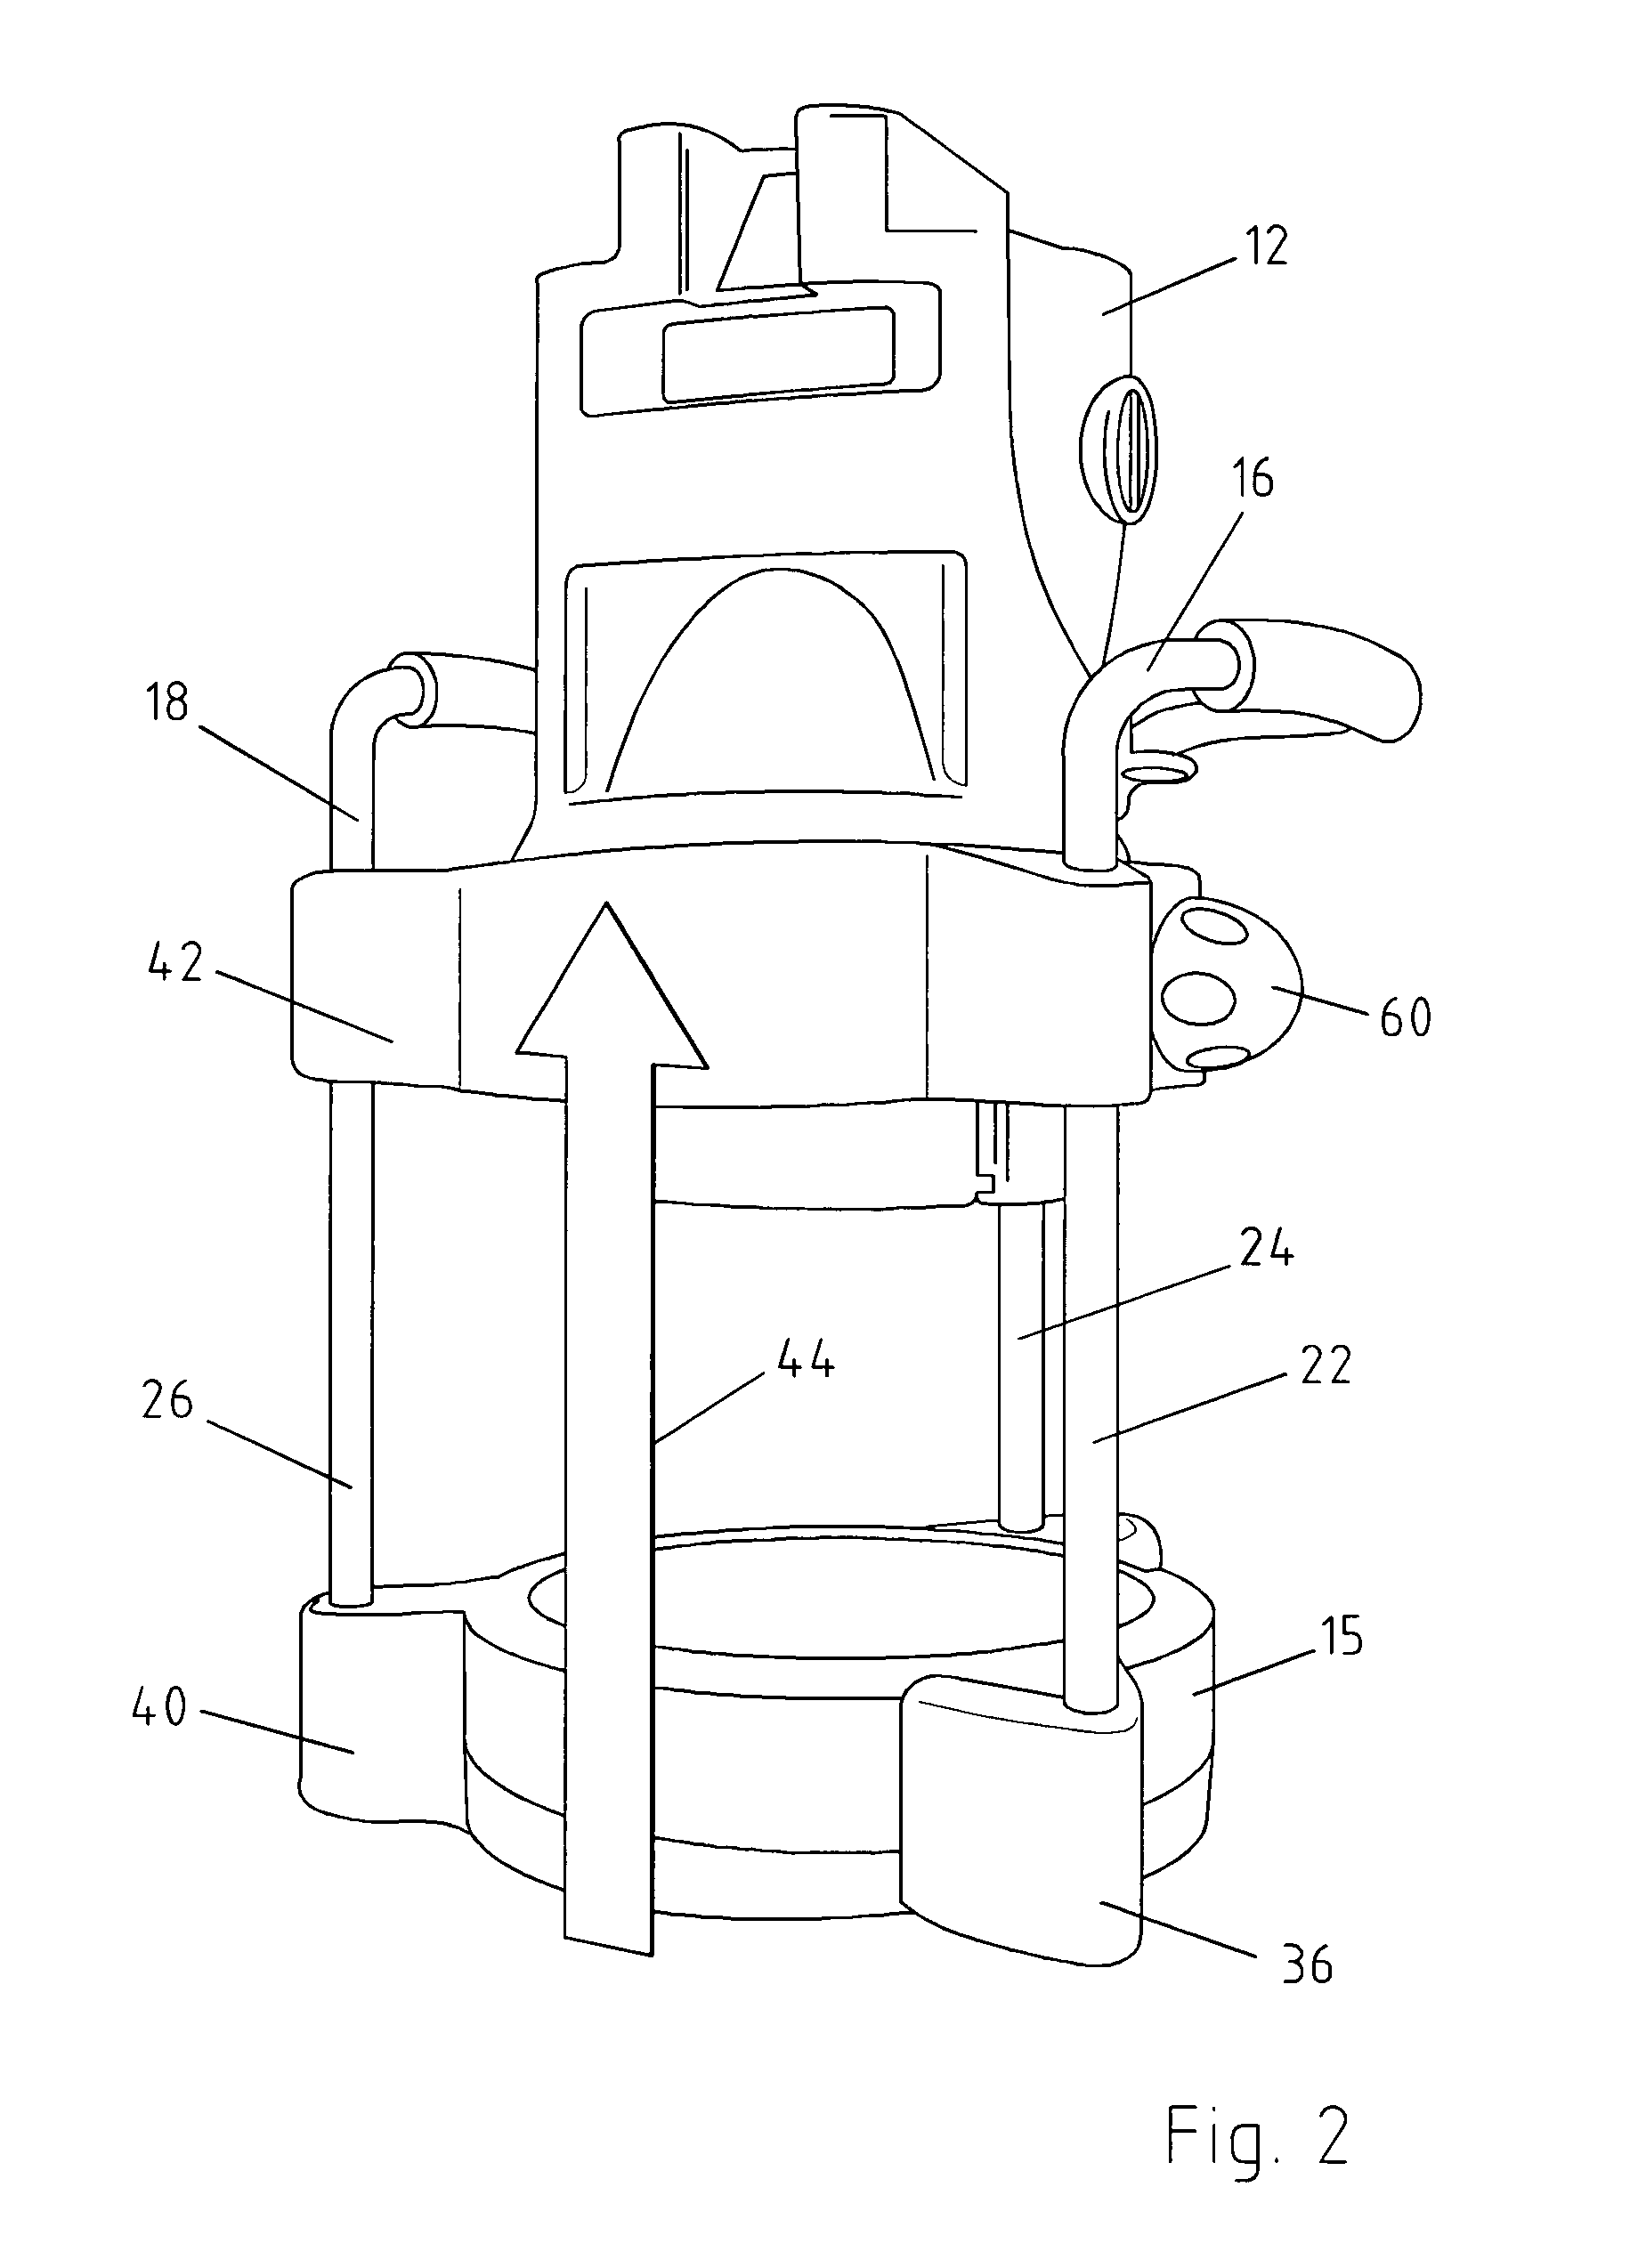 Laser apparatus such as a construction laser apparatus